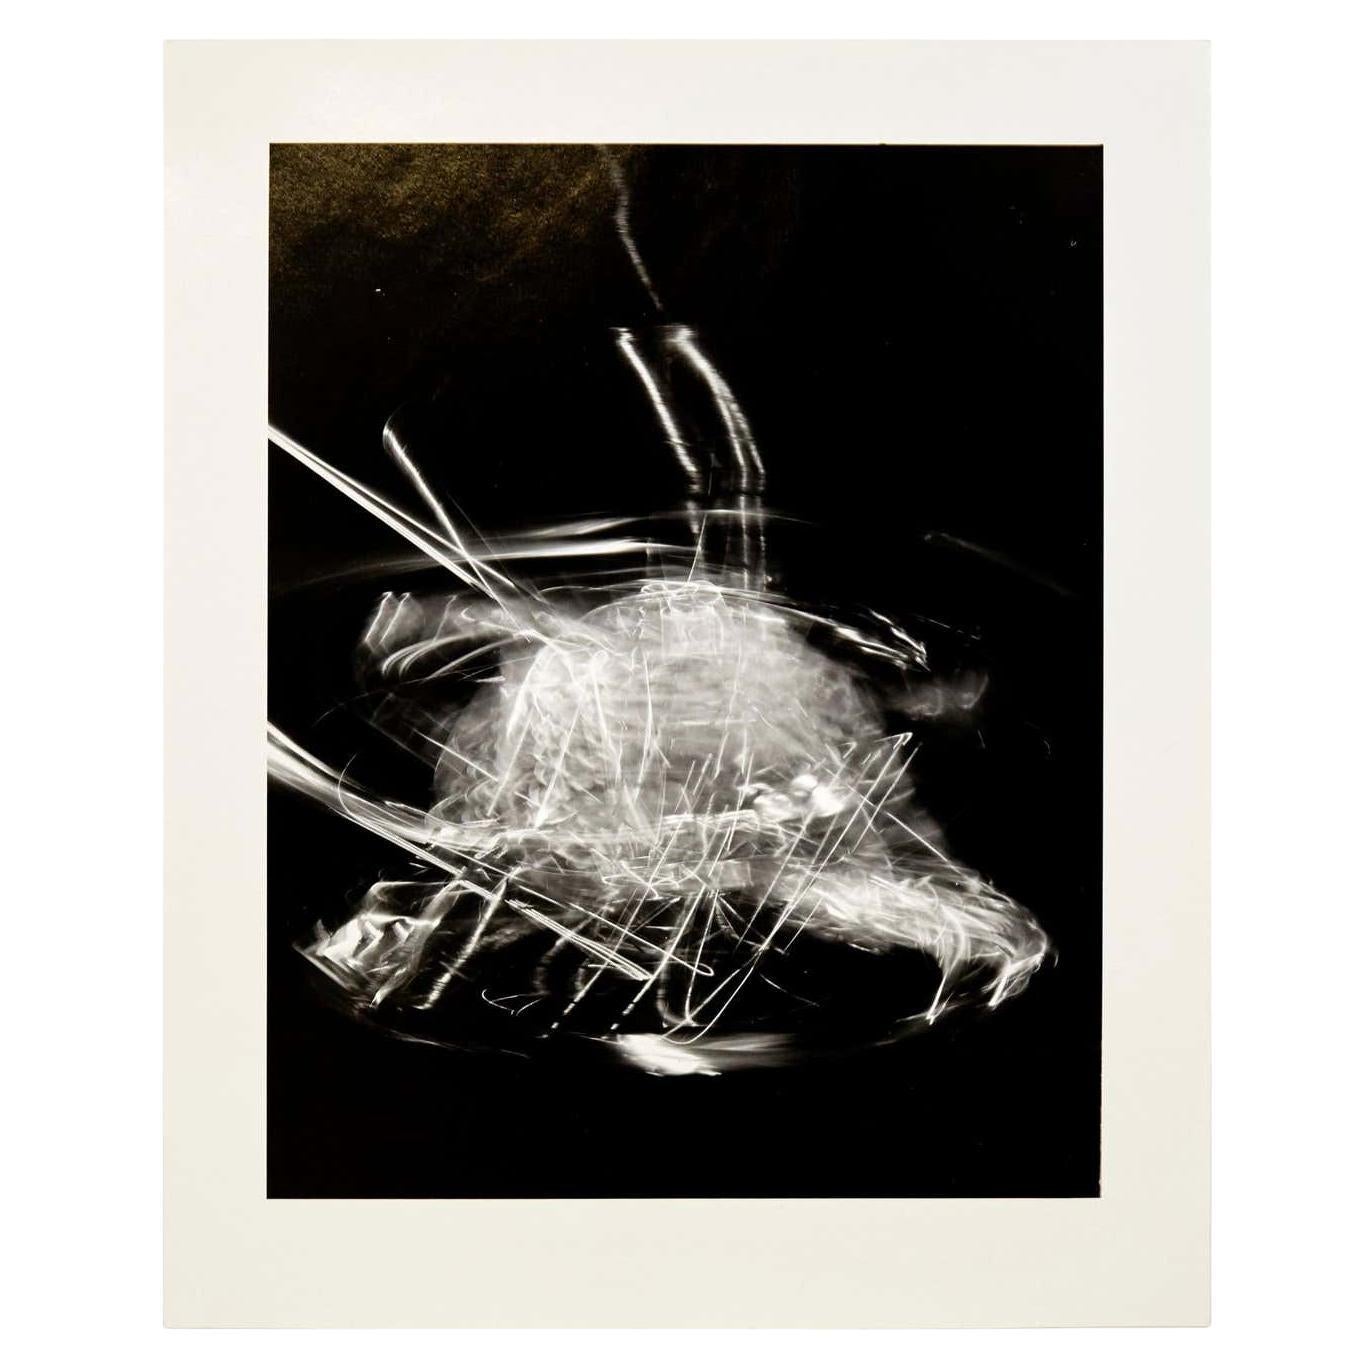 László Moholy-Nagy "Licht-Raum Modulationen" Photography 4/6 For Sale